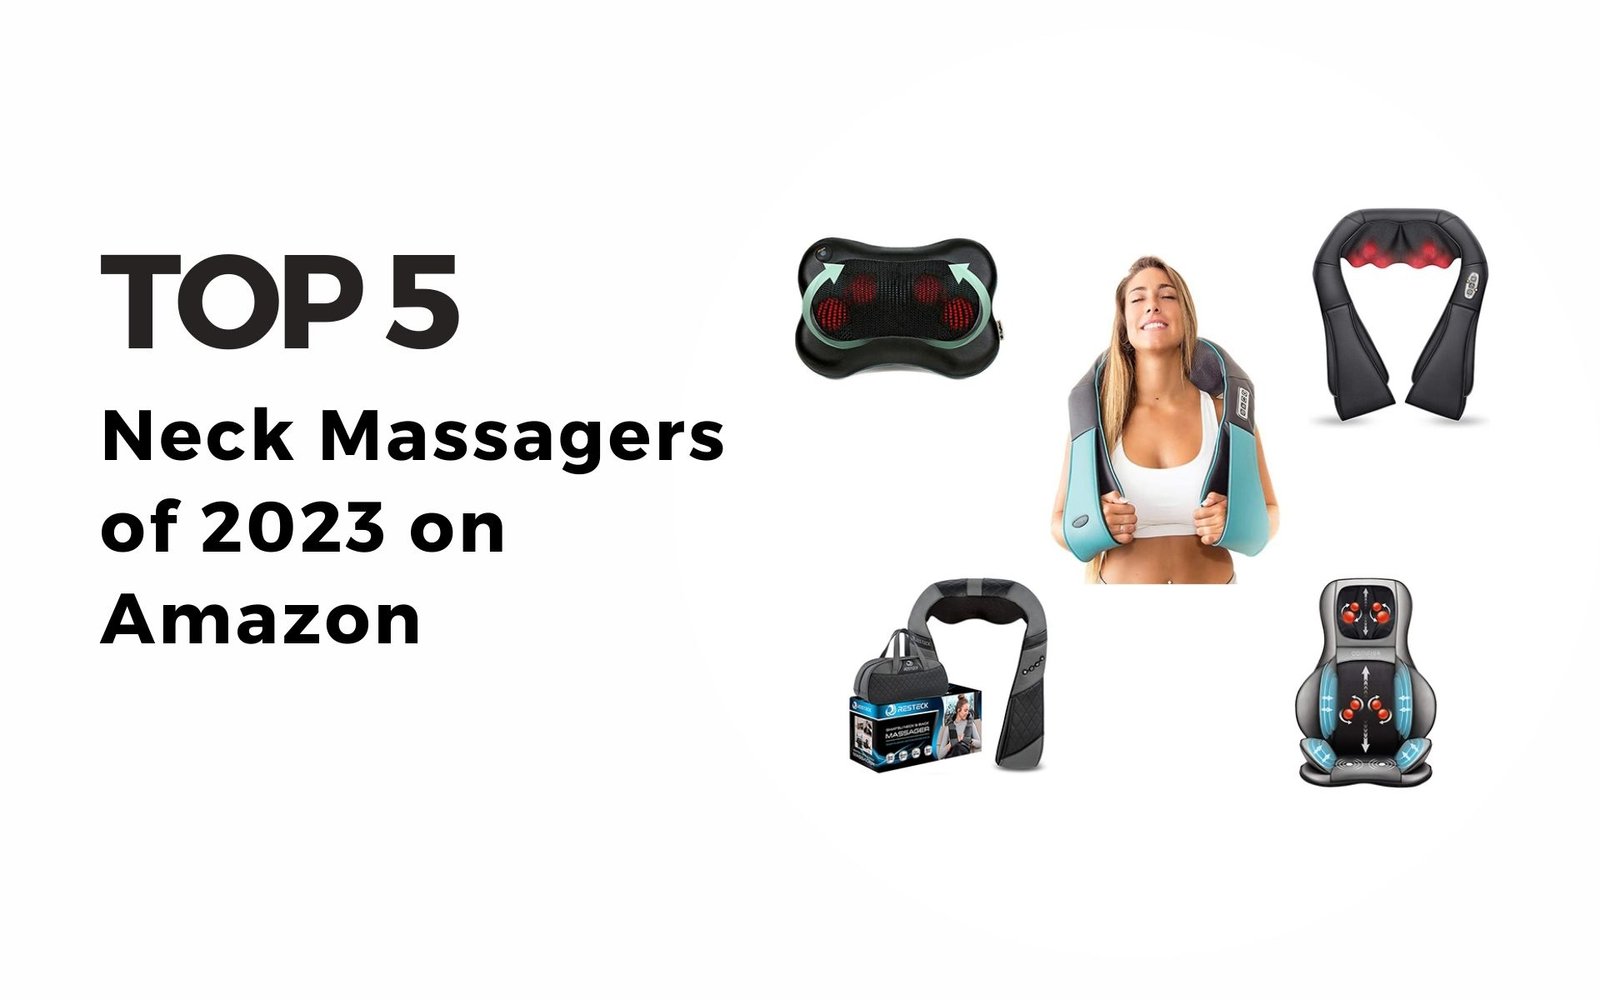 https://ola-health.com/wp-content/uploads/2023/02/Top-5-Neck-Massagers-of-2023-on-Amazon.jpg